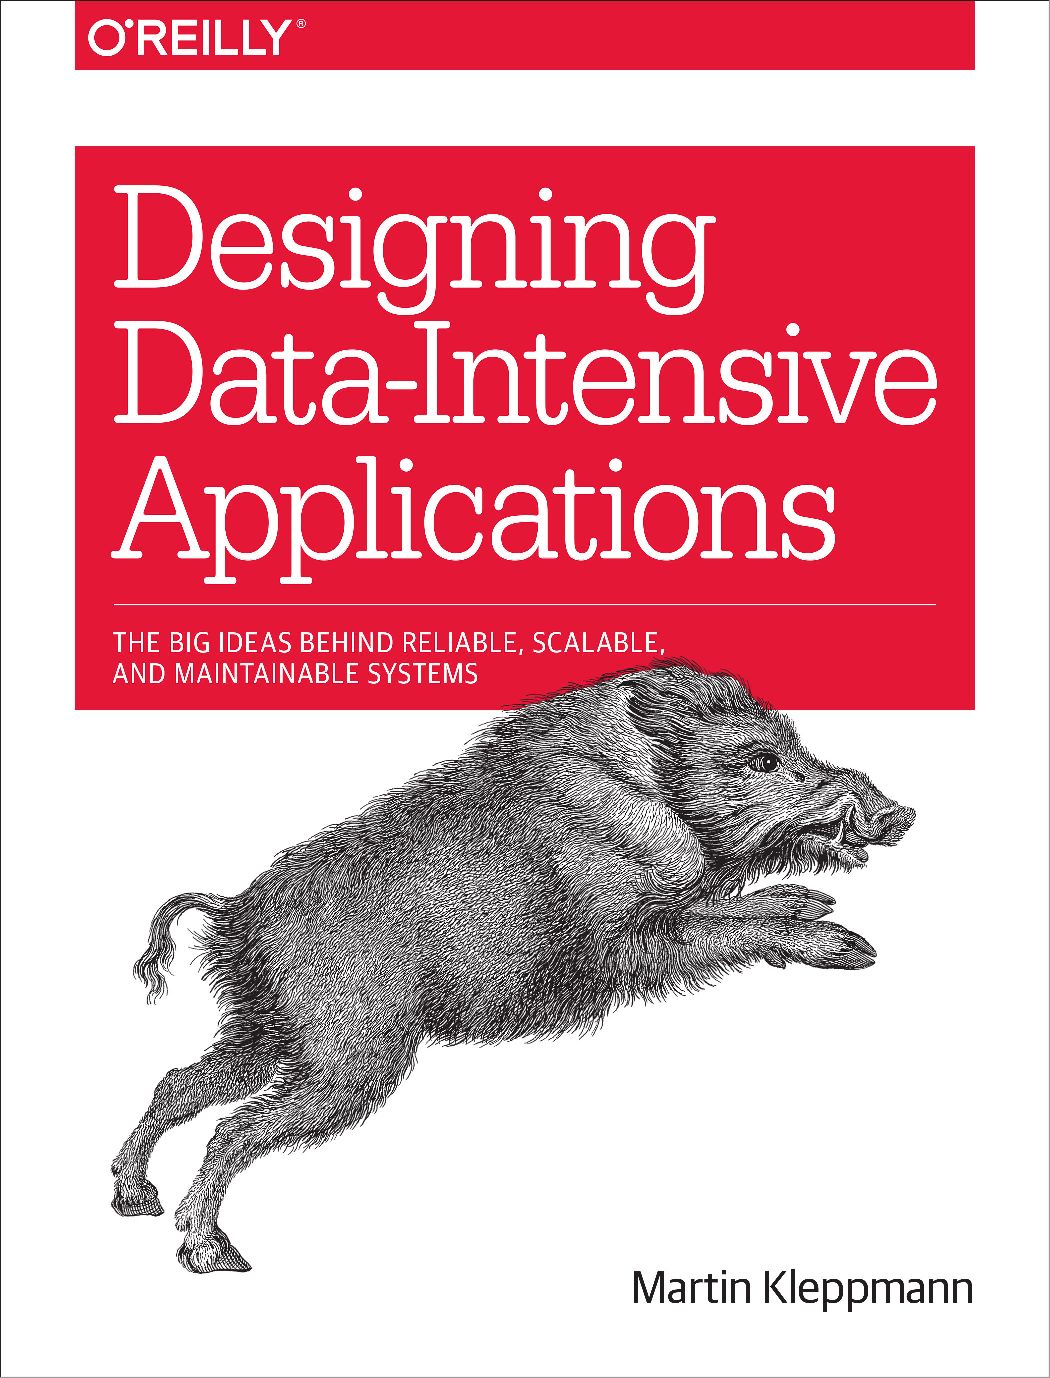 [PDF/ePub] Designing Data-Intensive Applications